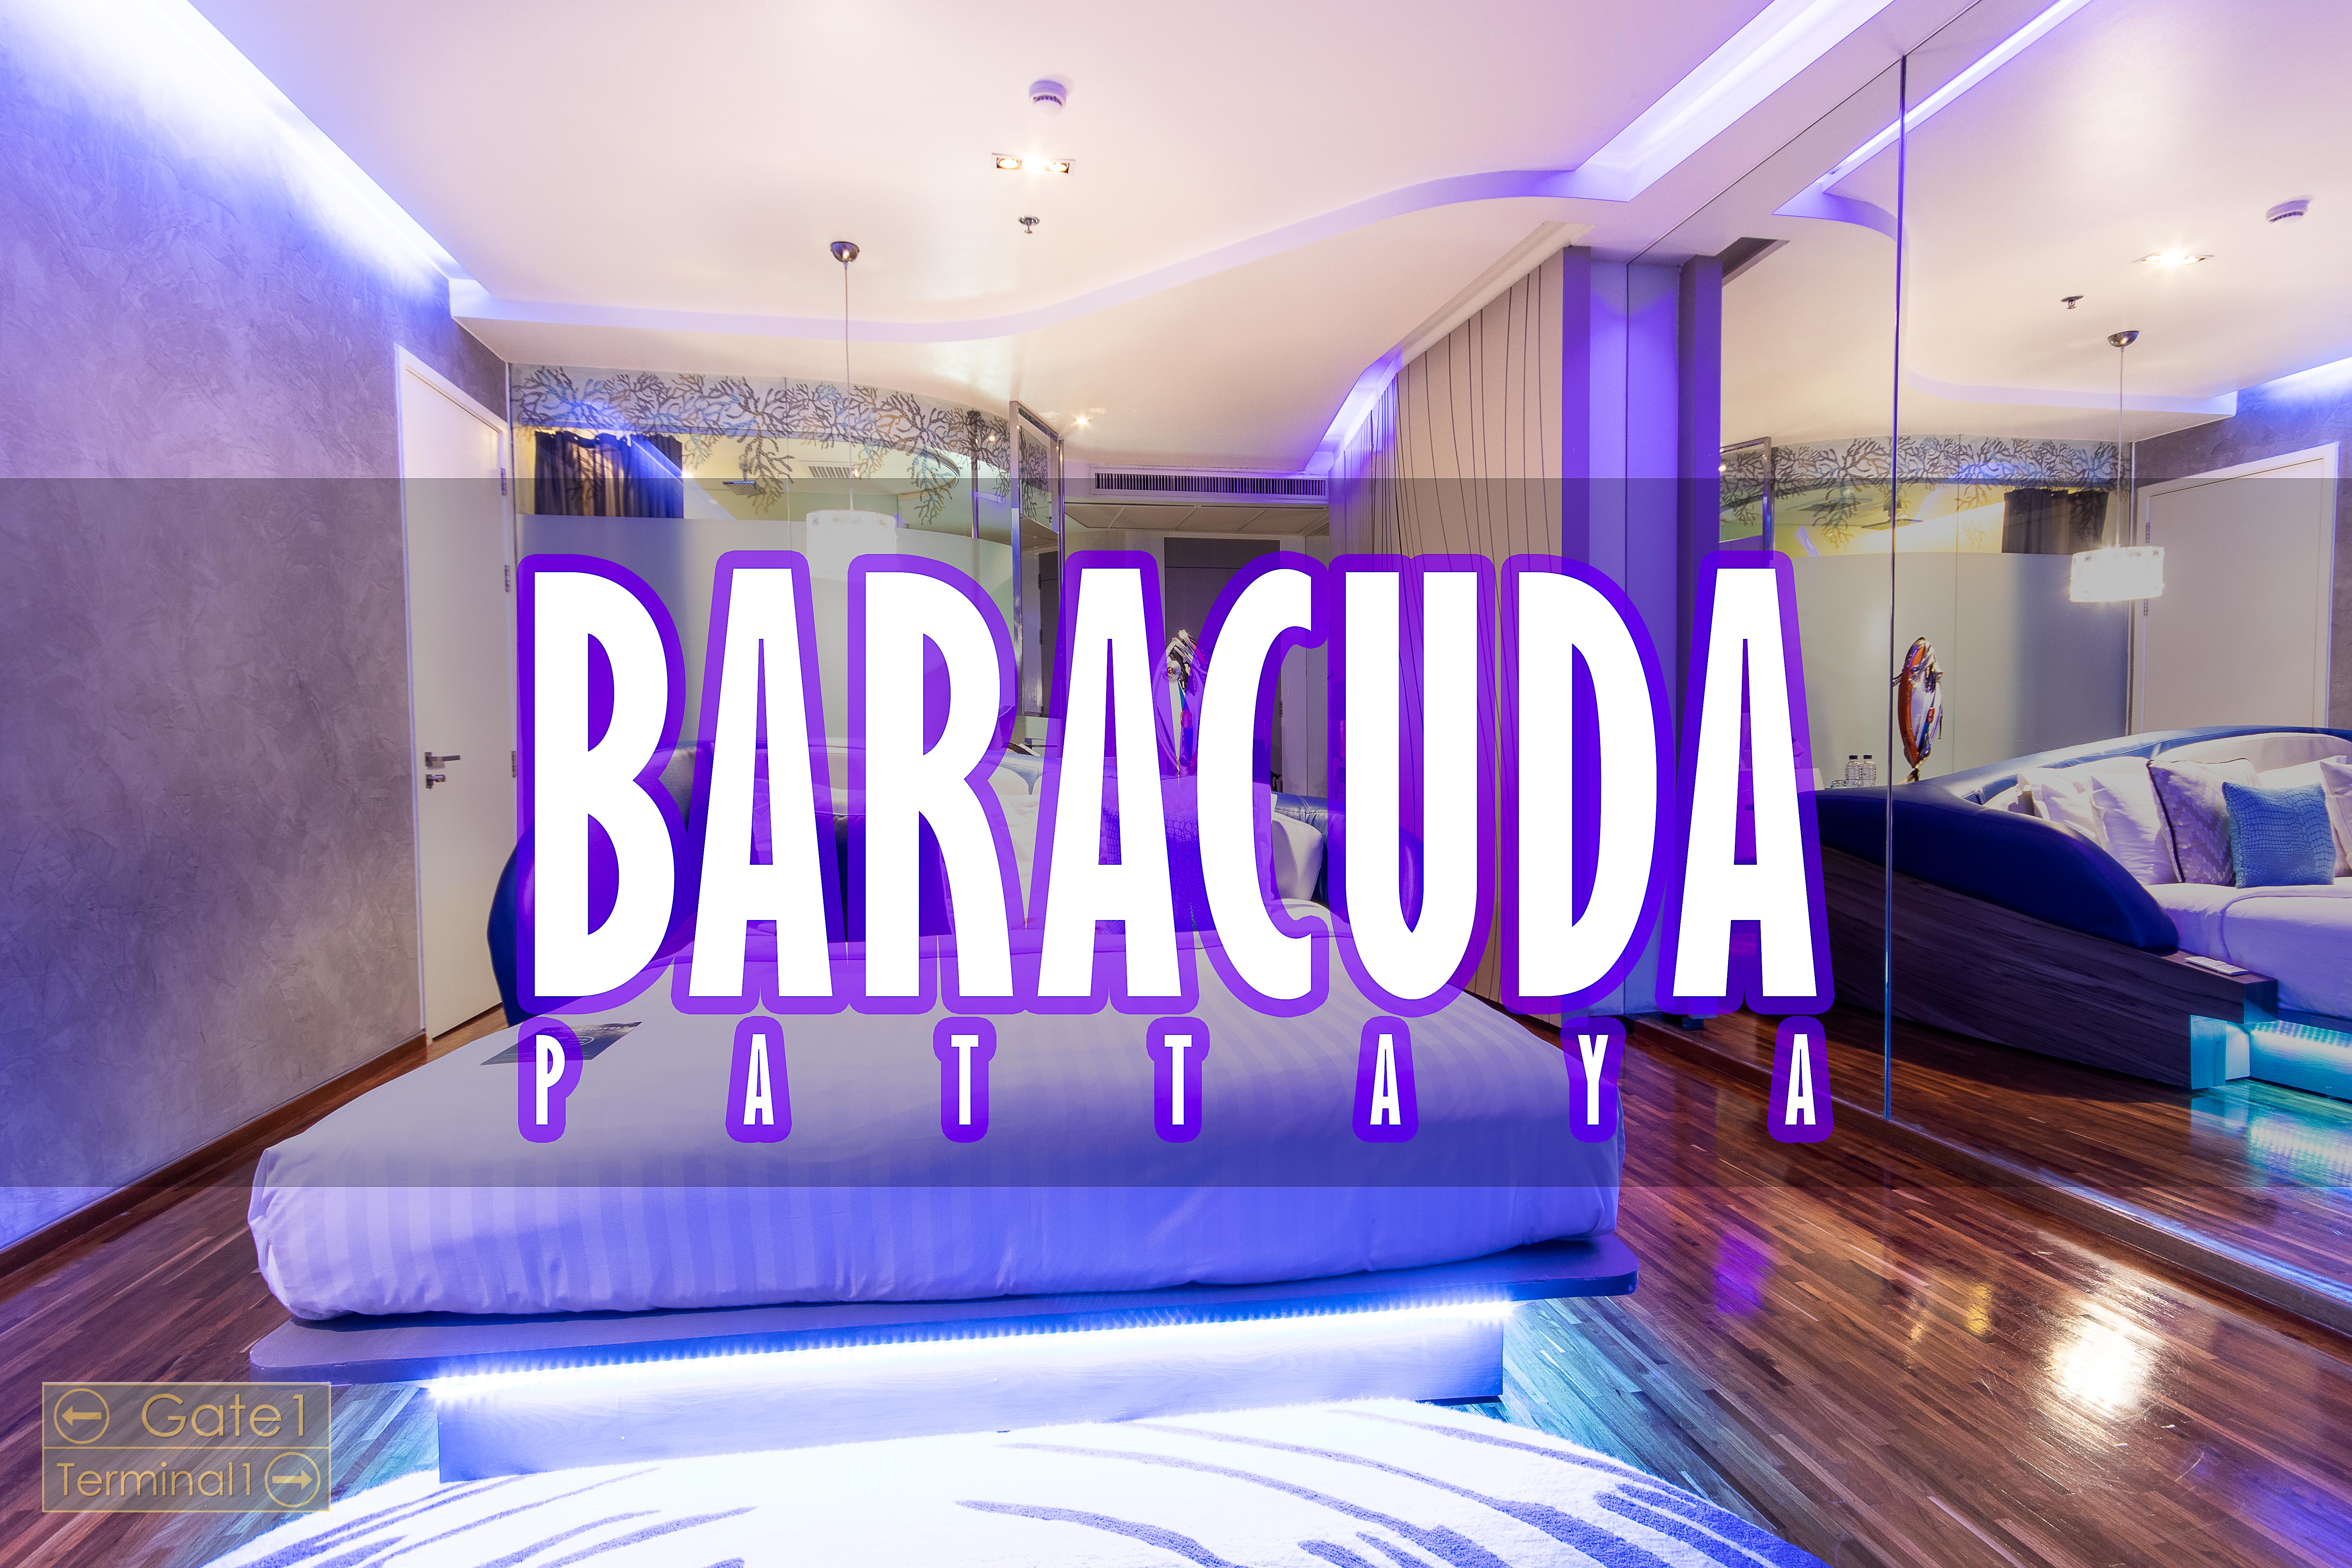 Review Hotel Baracuda Pattaya MGallery โรงแรมสีจัด ศิลปะ และความเซ็กซี่